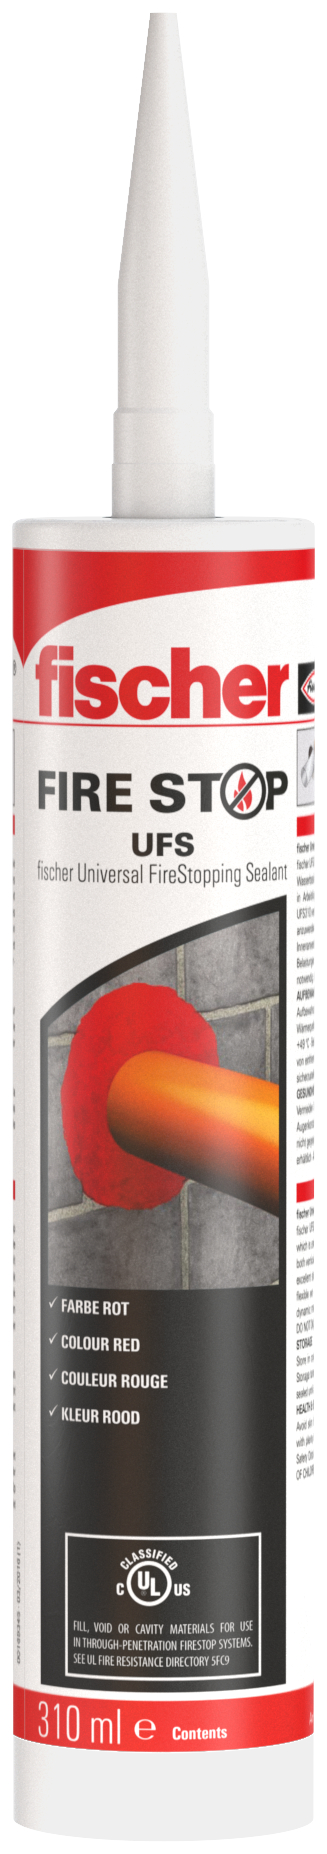 Universal FireStopping Sealant UFS 310